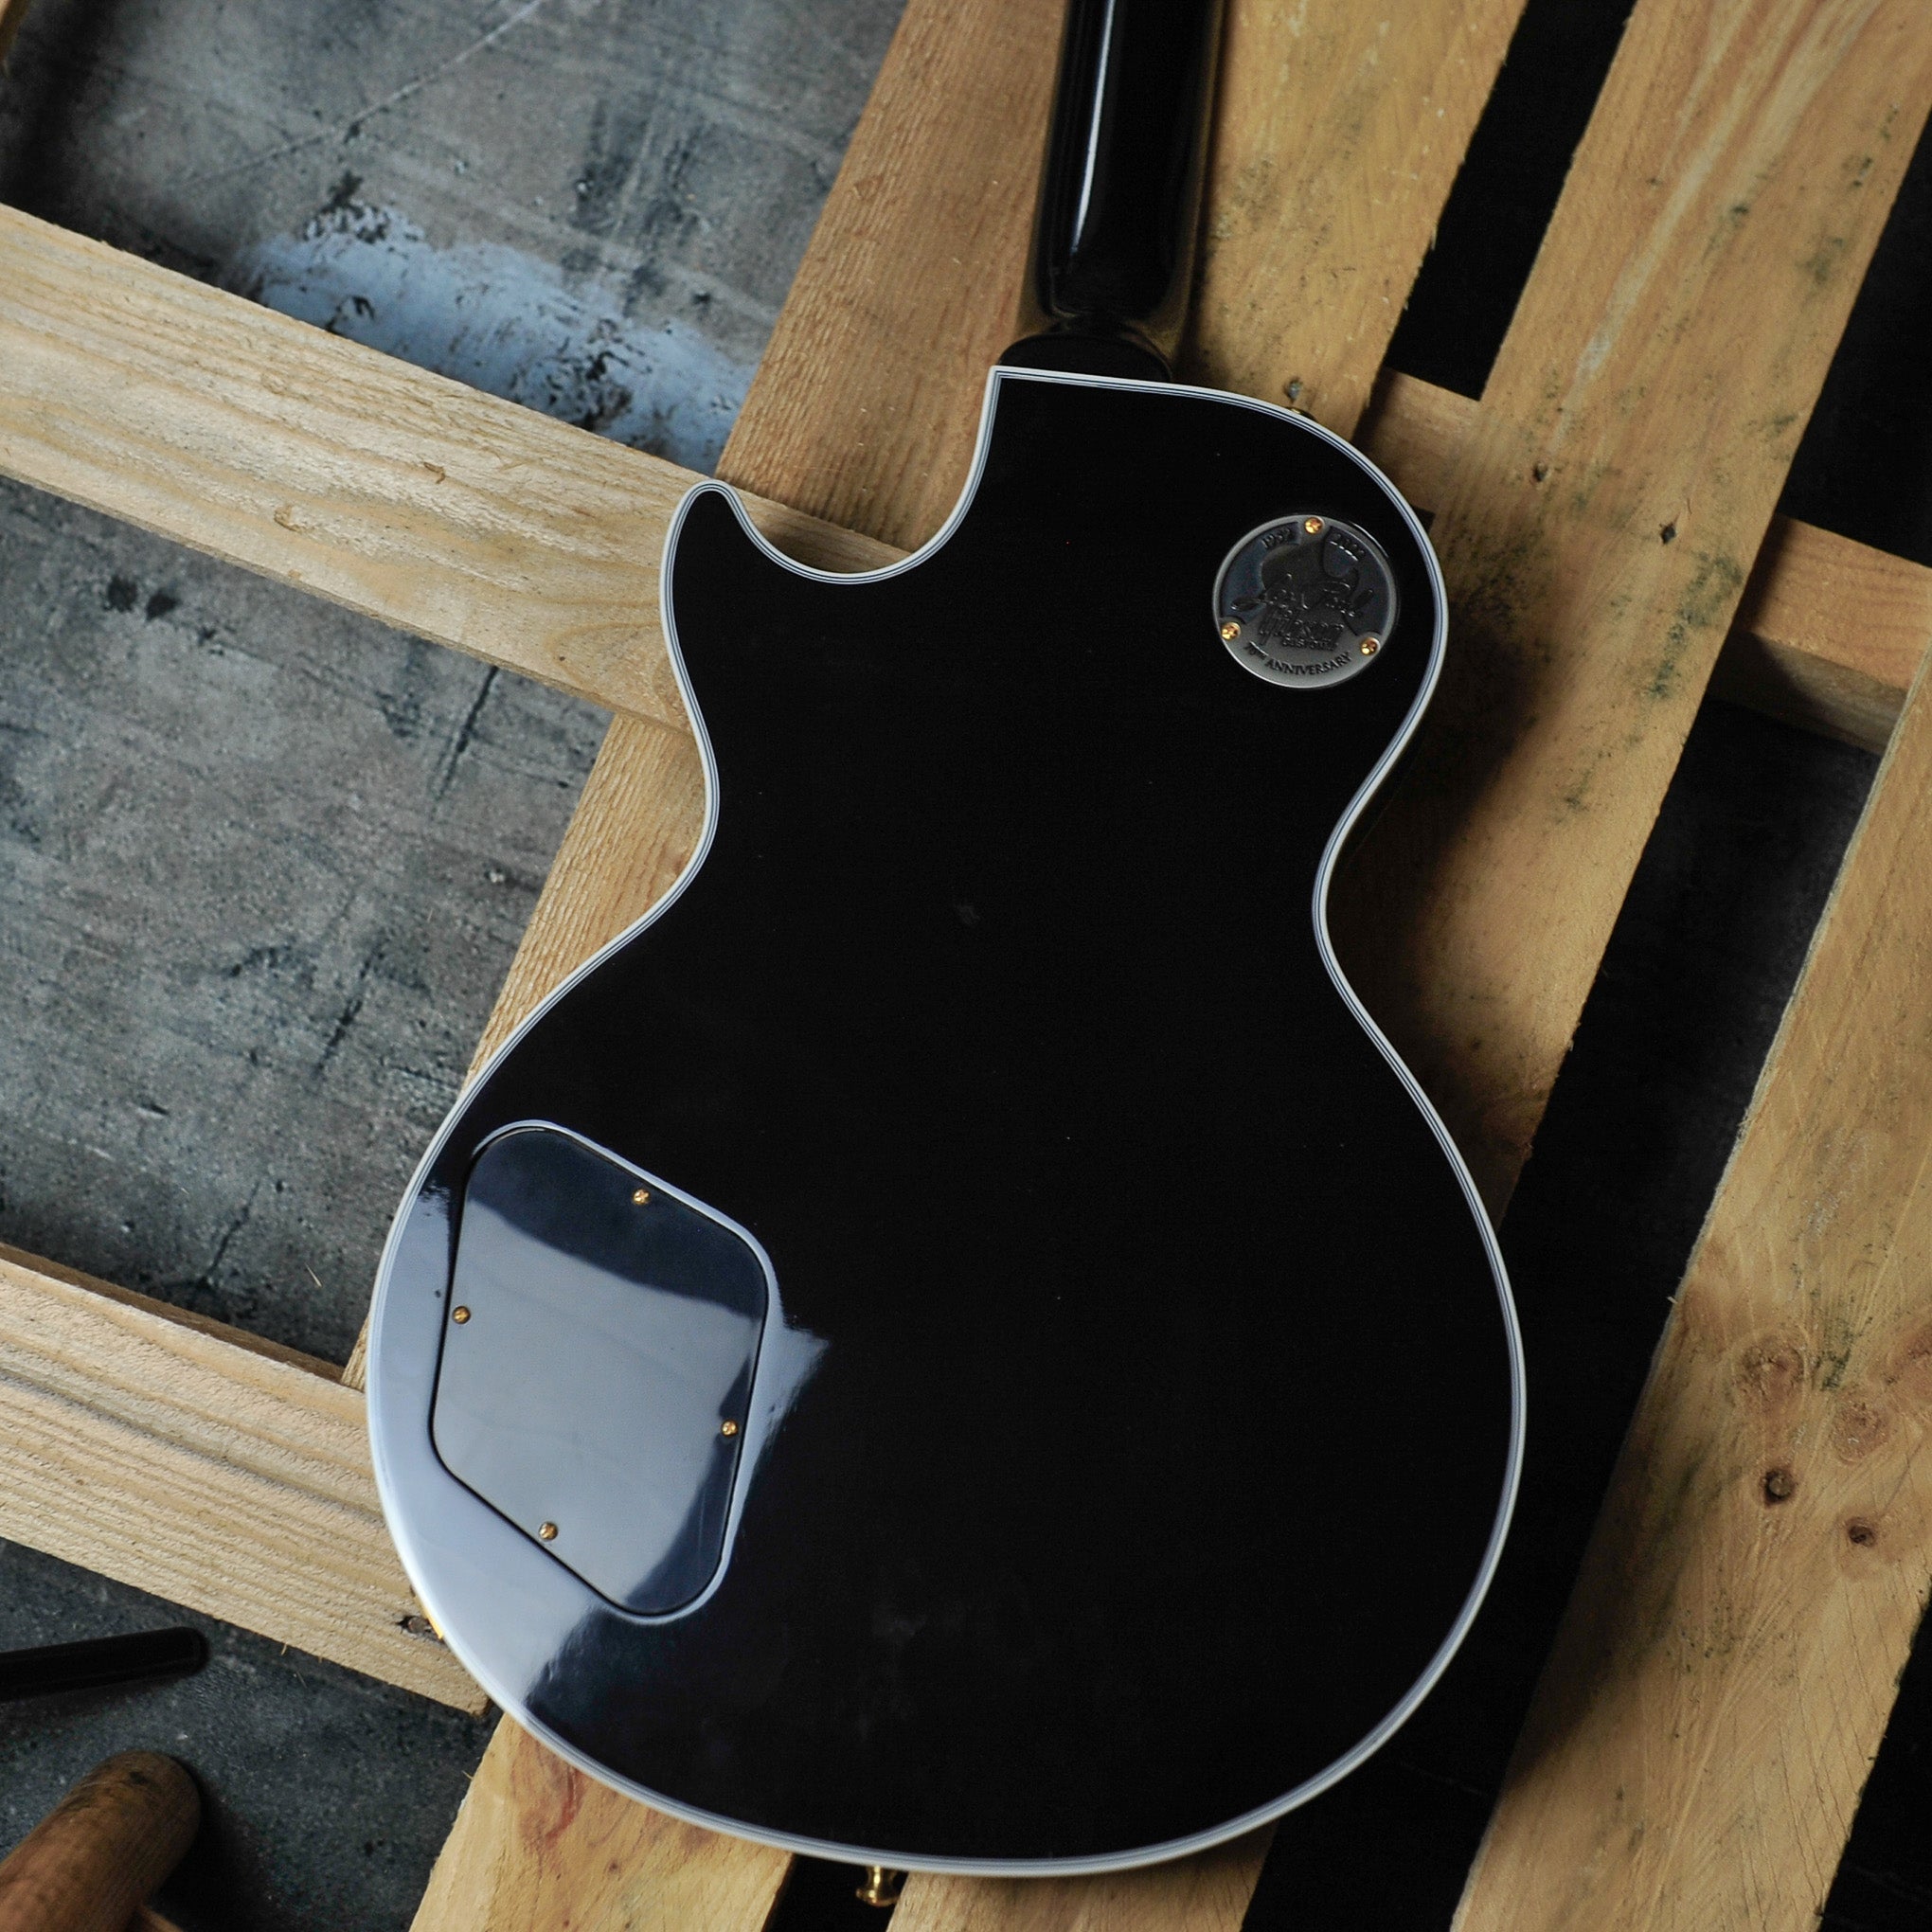 Gibson Les Paul Custom  - Ebony (Black) “2022” w/Case - Used